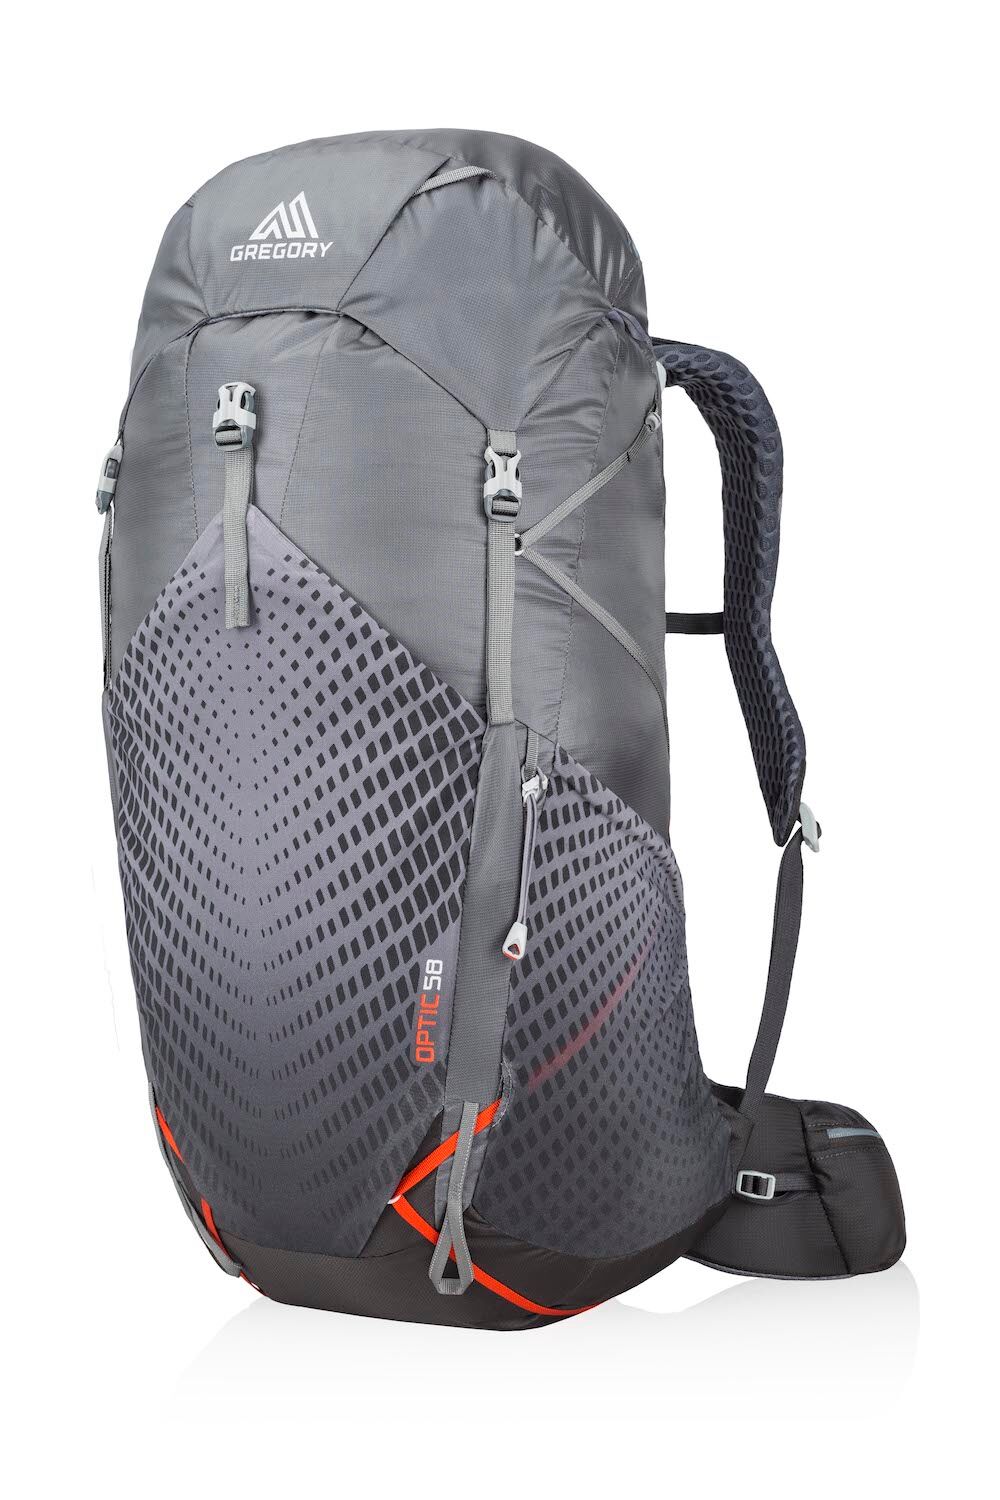 Gregory Optic 58 - Hiking backpack - Men's